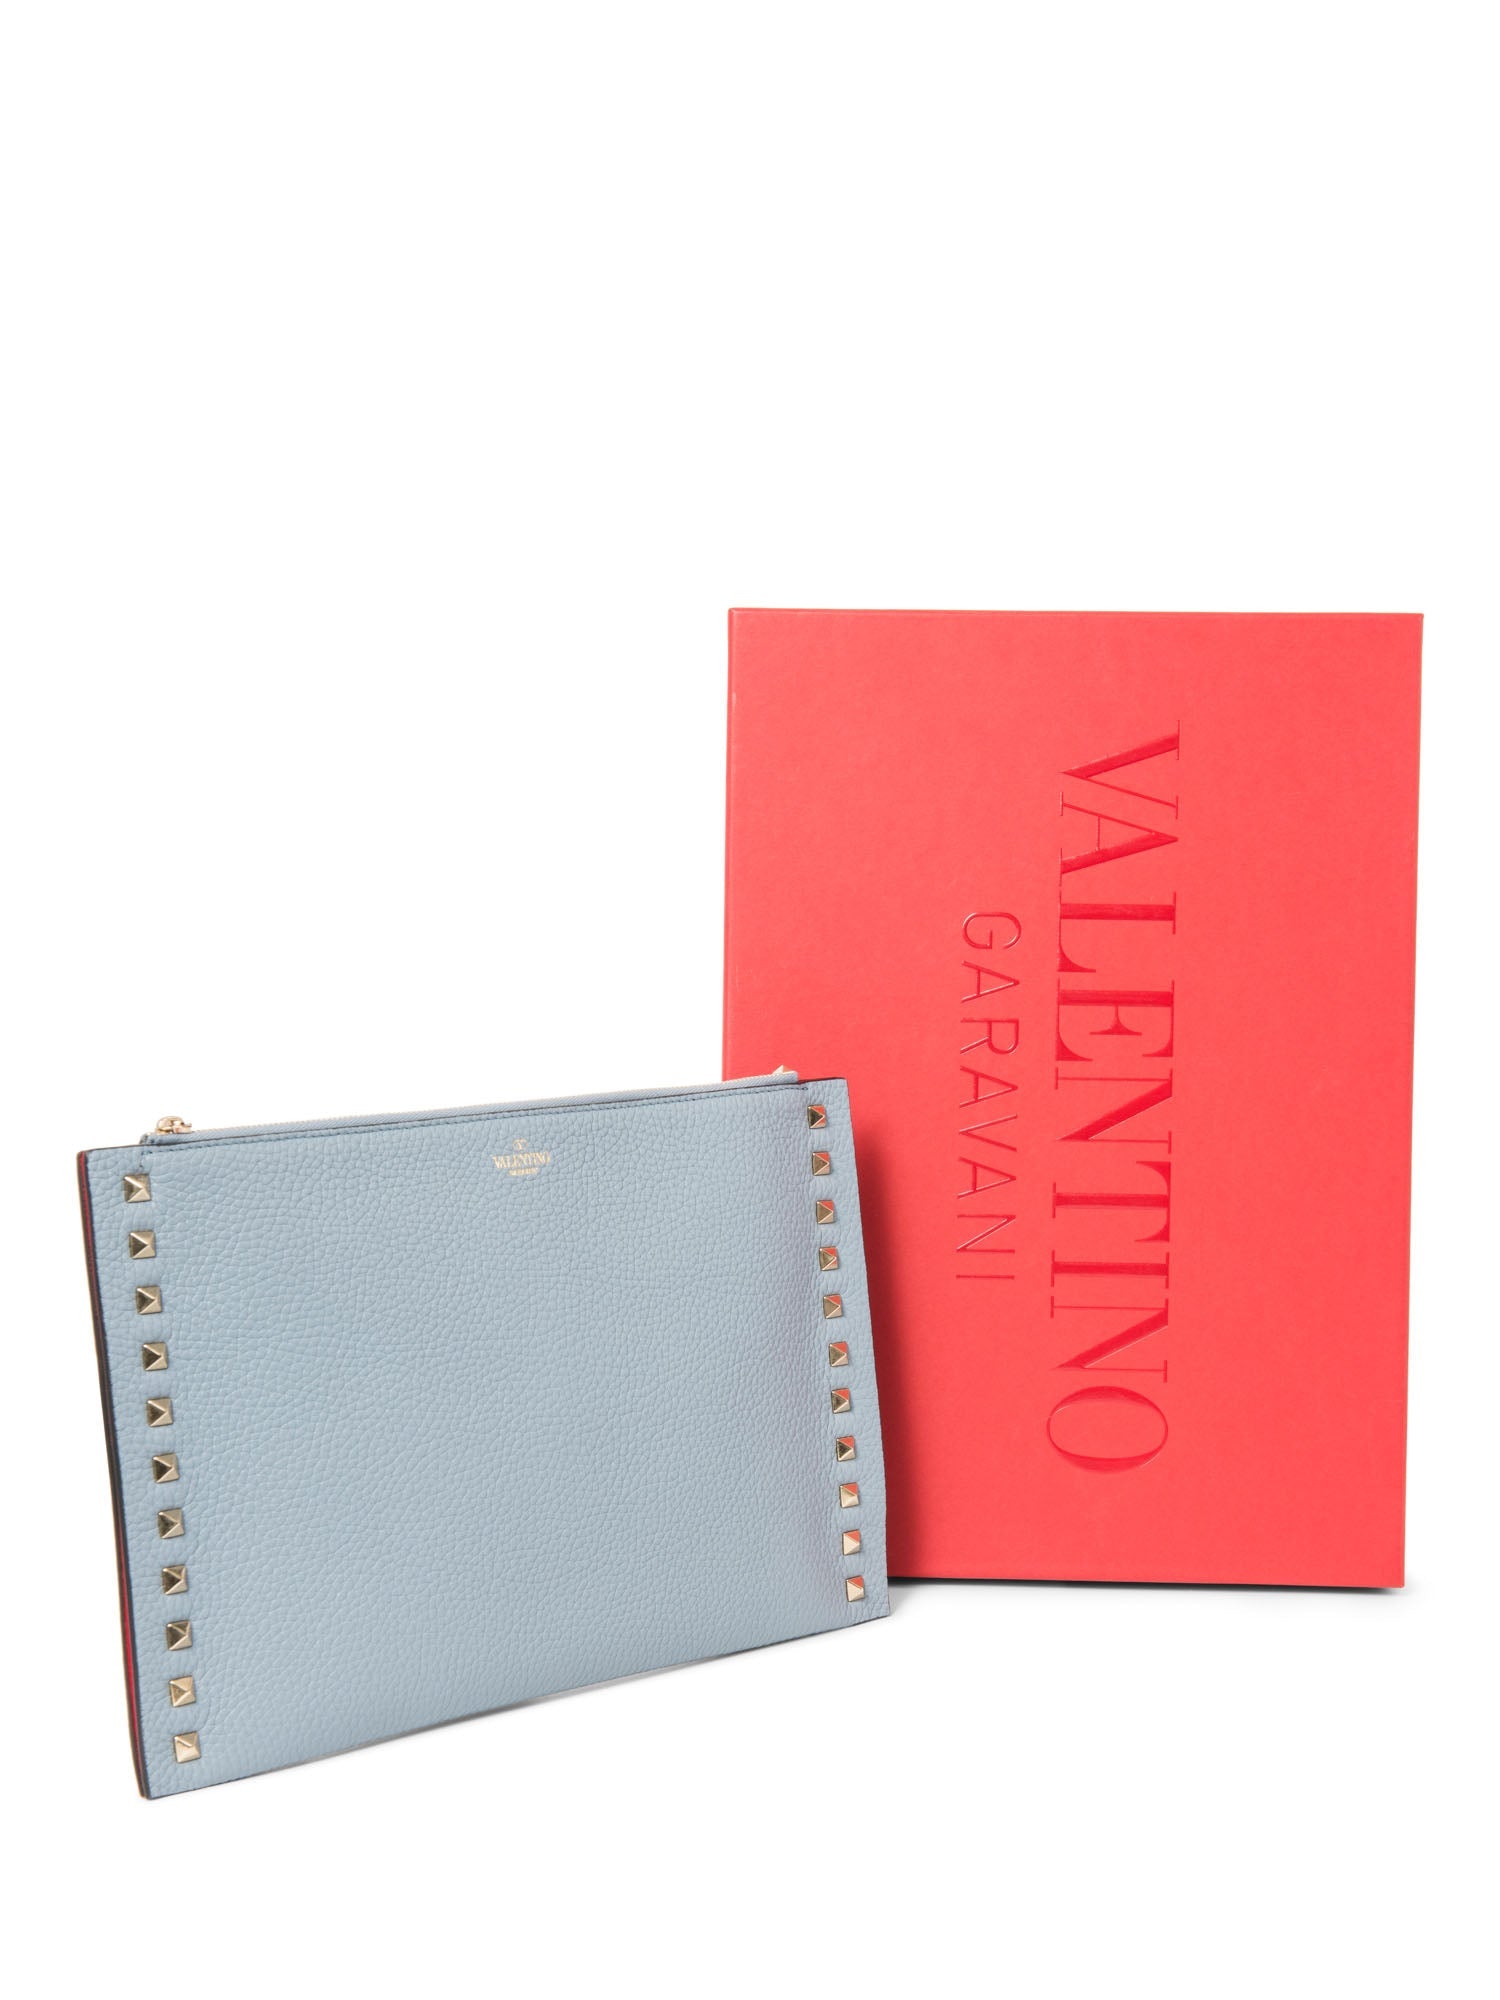 Valentino Logo Leather Rockstud Zippered Clutch Blue Gold